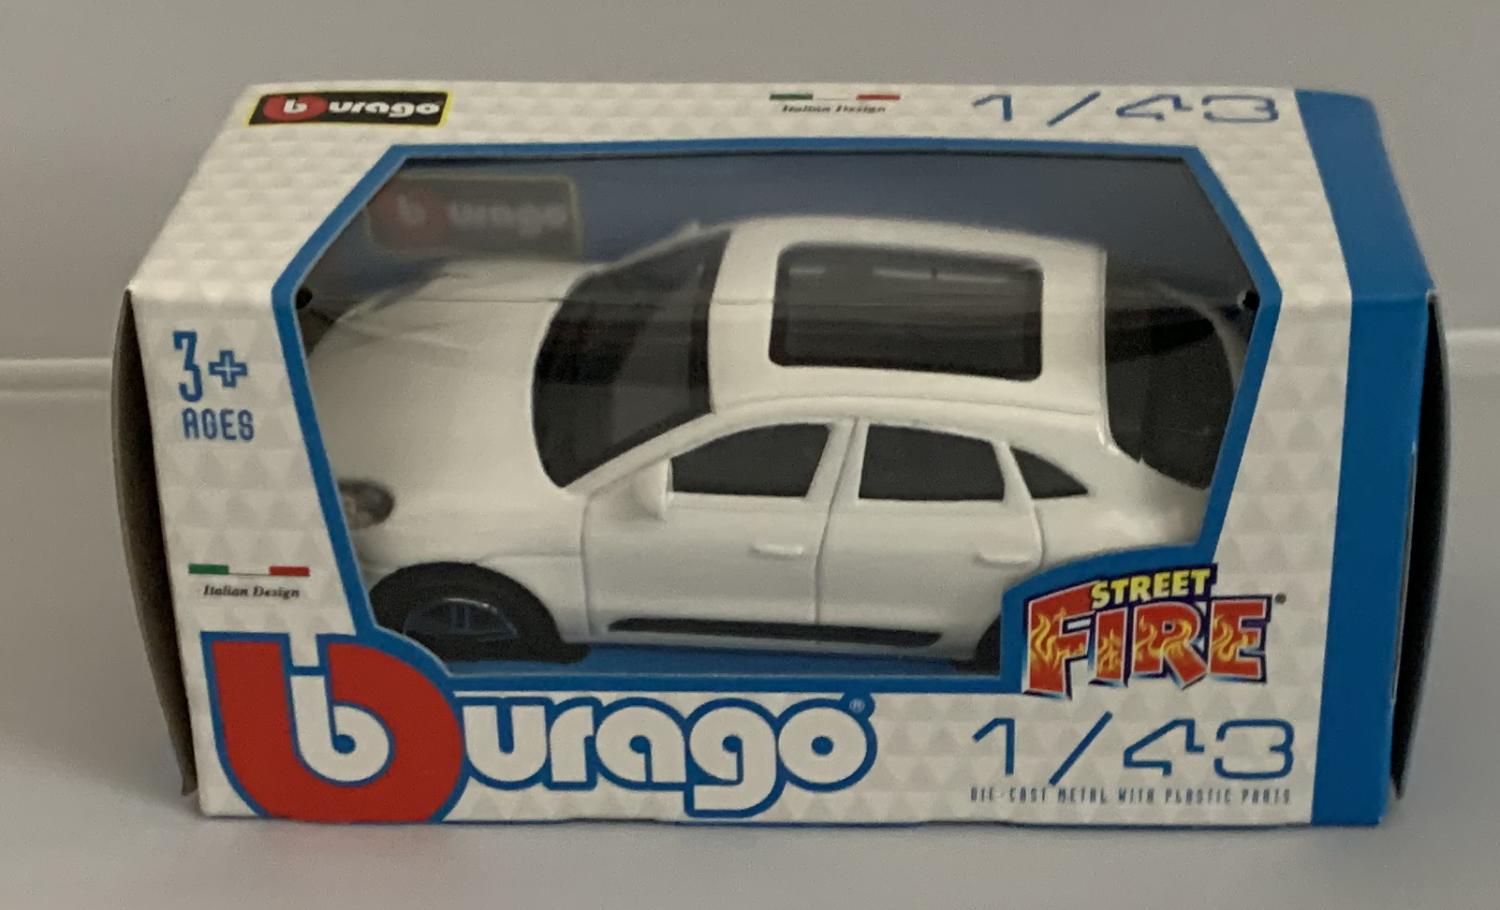 Porsche Macan in white 1:43 scale model from Bburago, streetfire